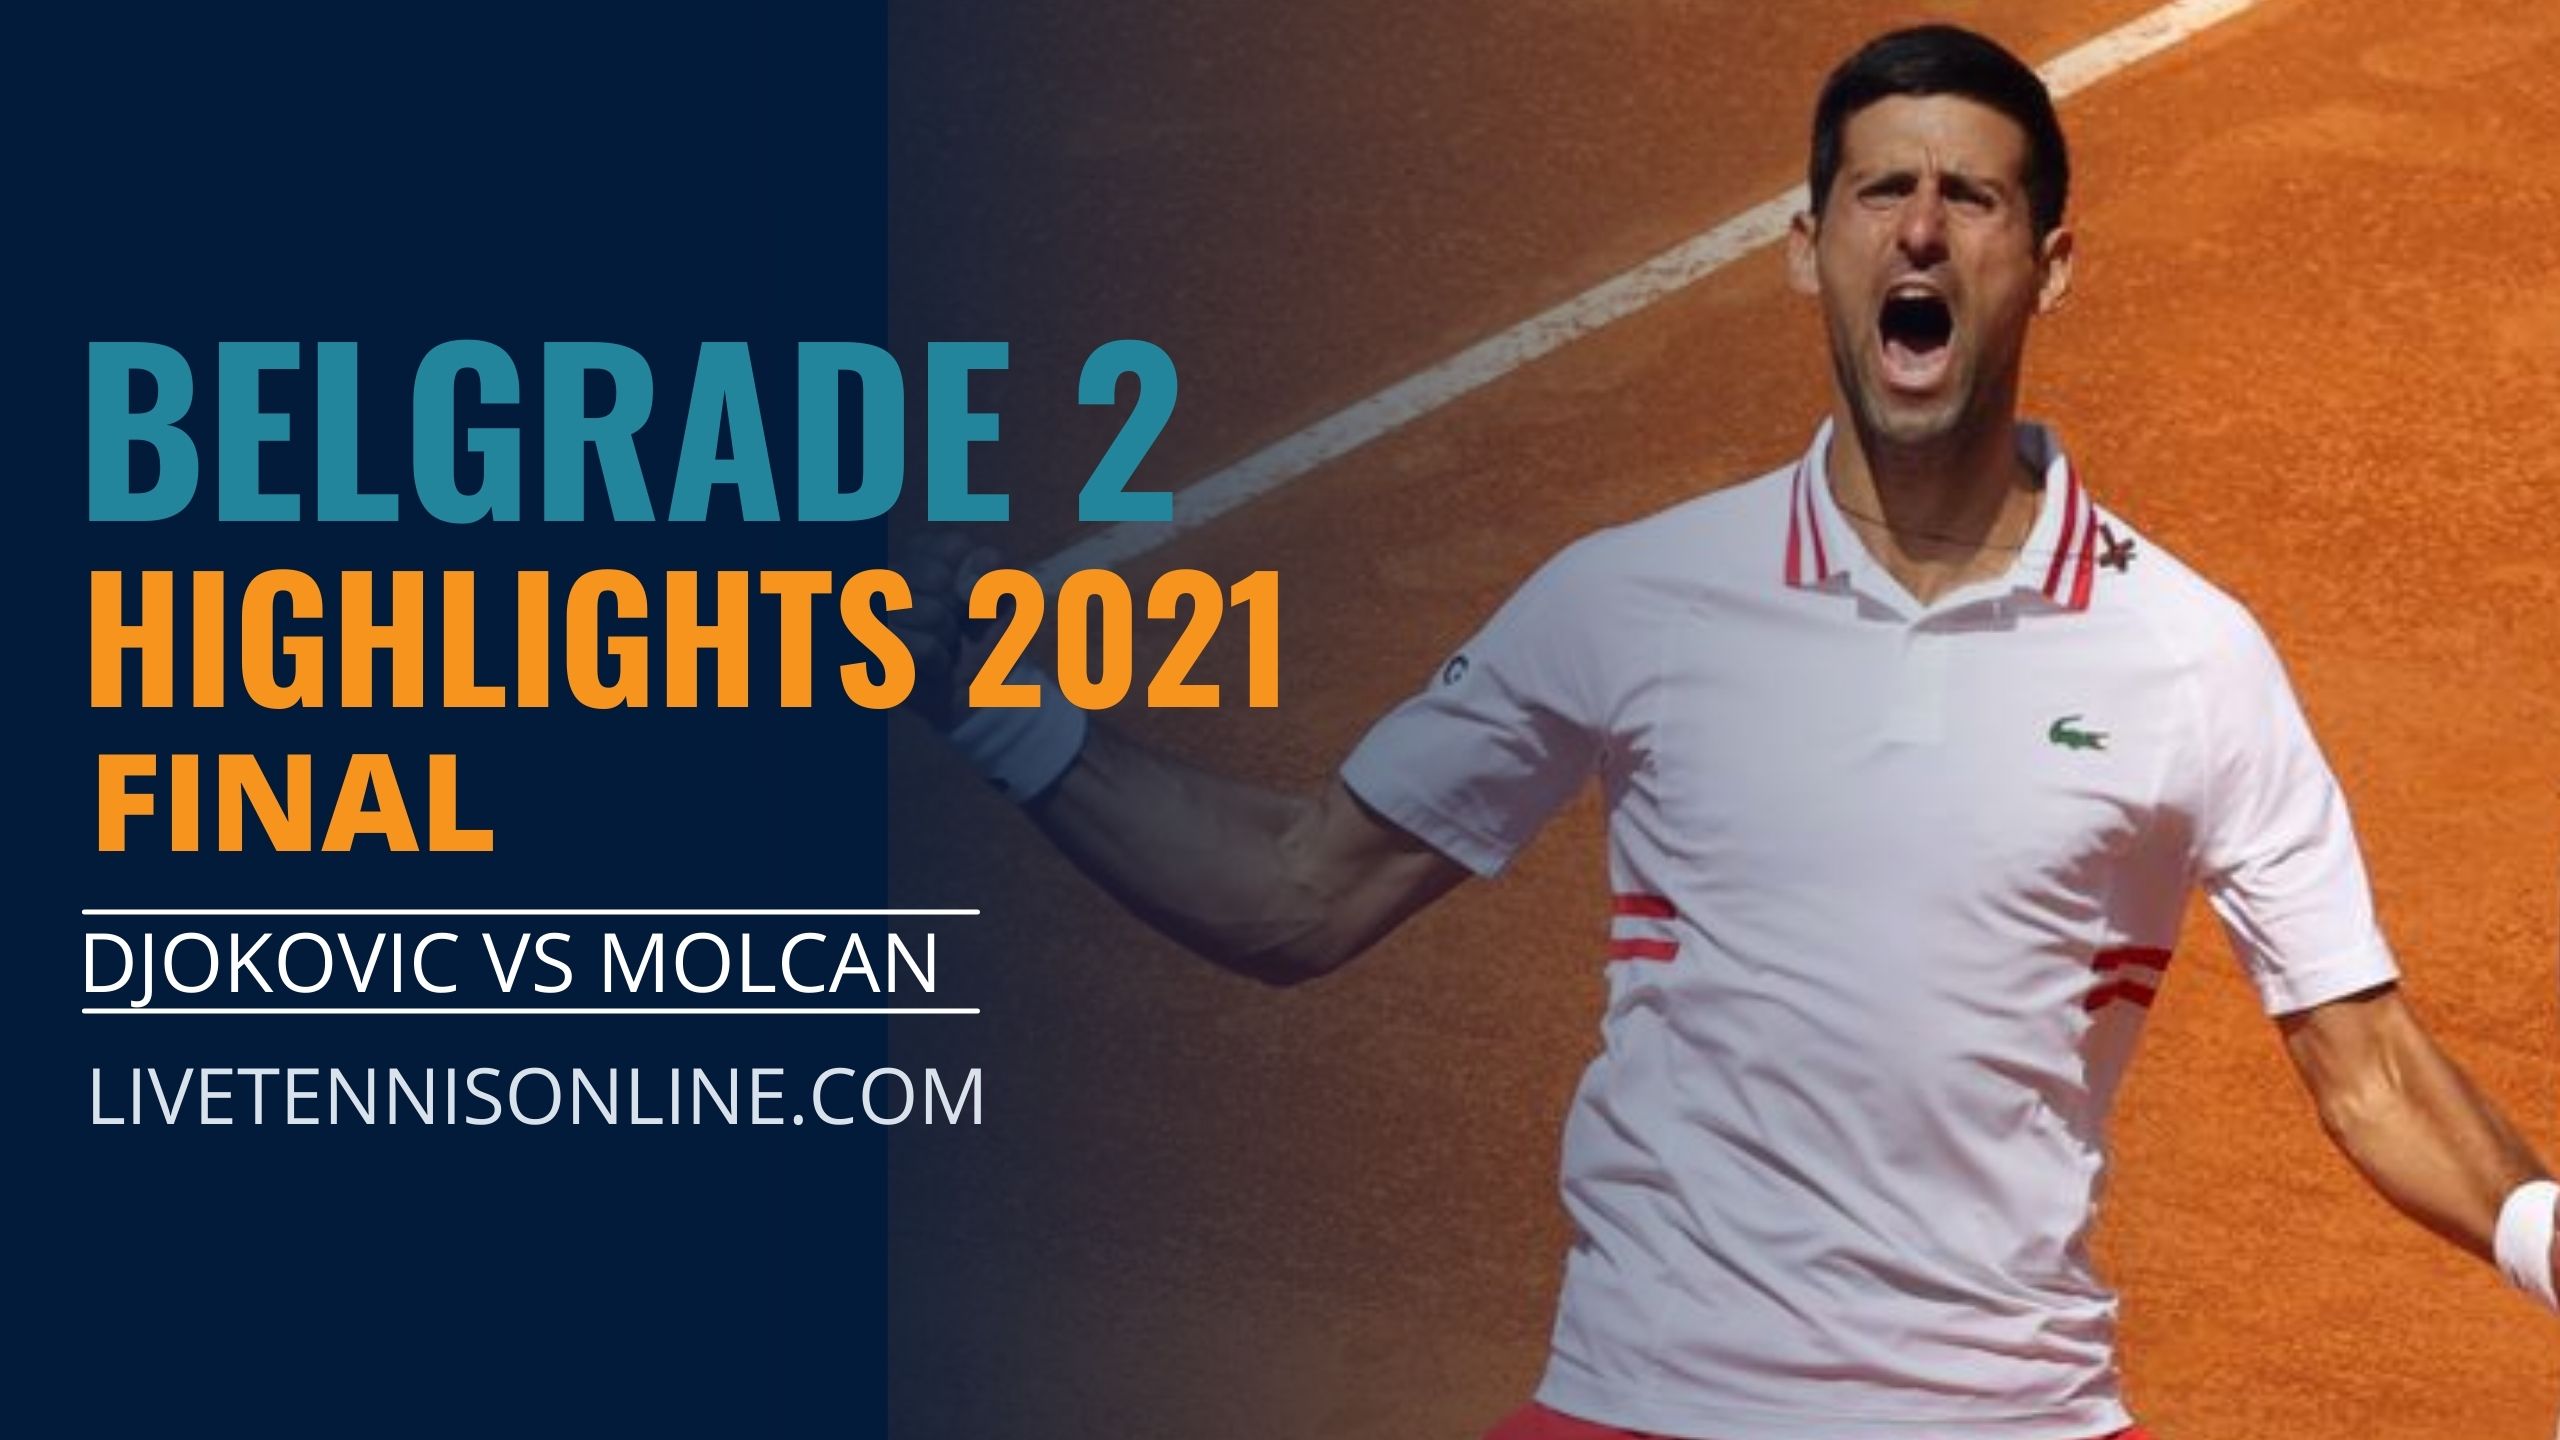 Djokovic Vs Molcan Final Highlights 2021